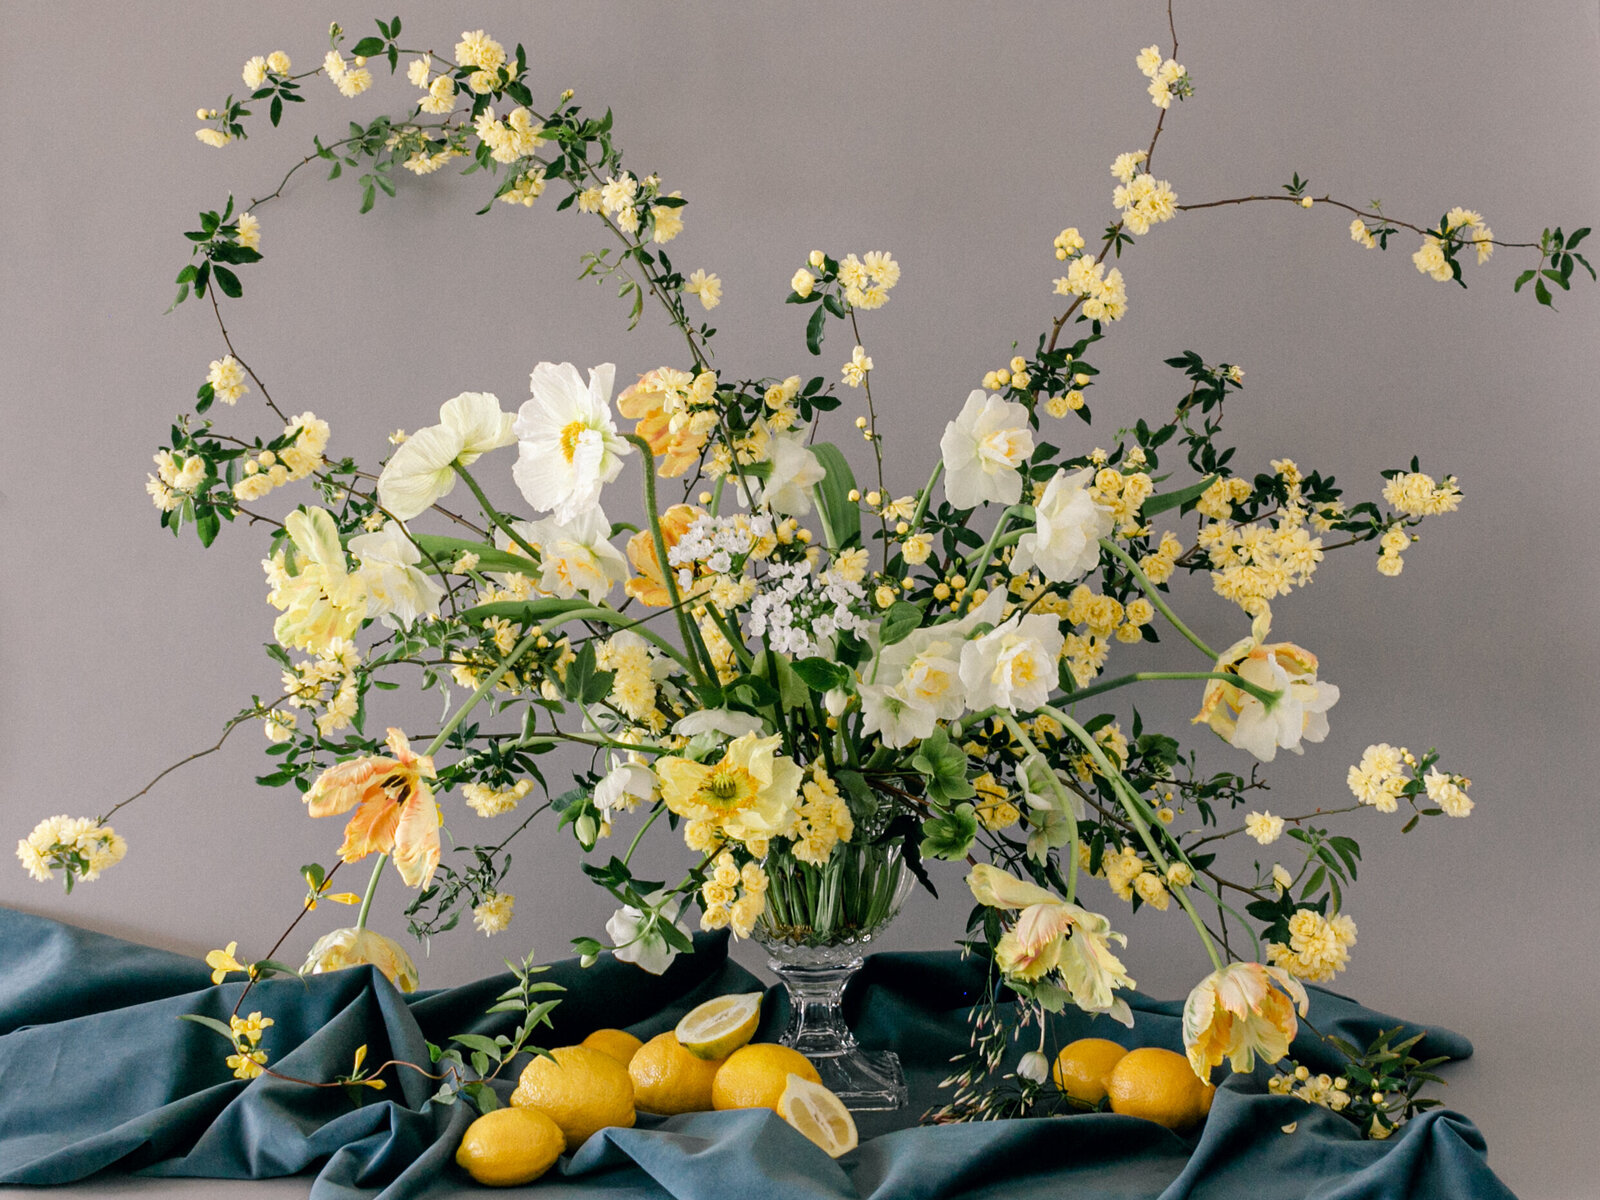 max-owens-design-at-home-floral-arrangements-03-yellow